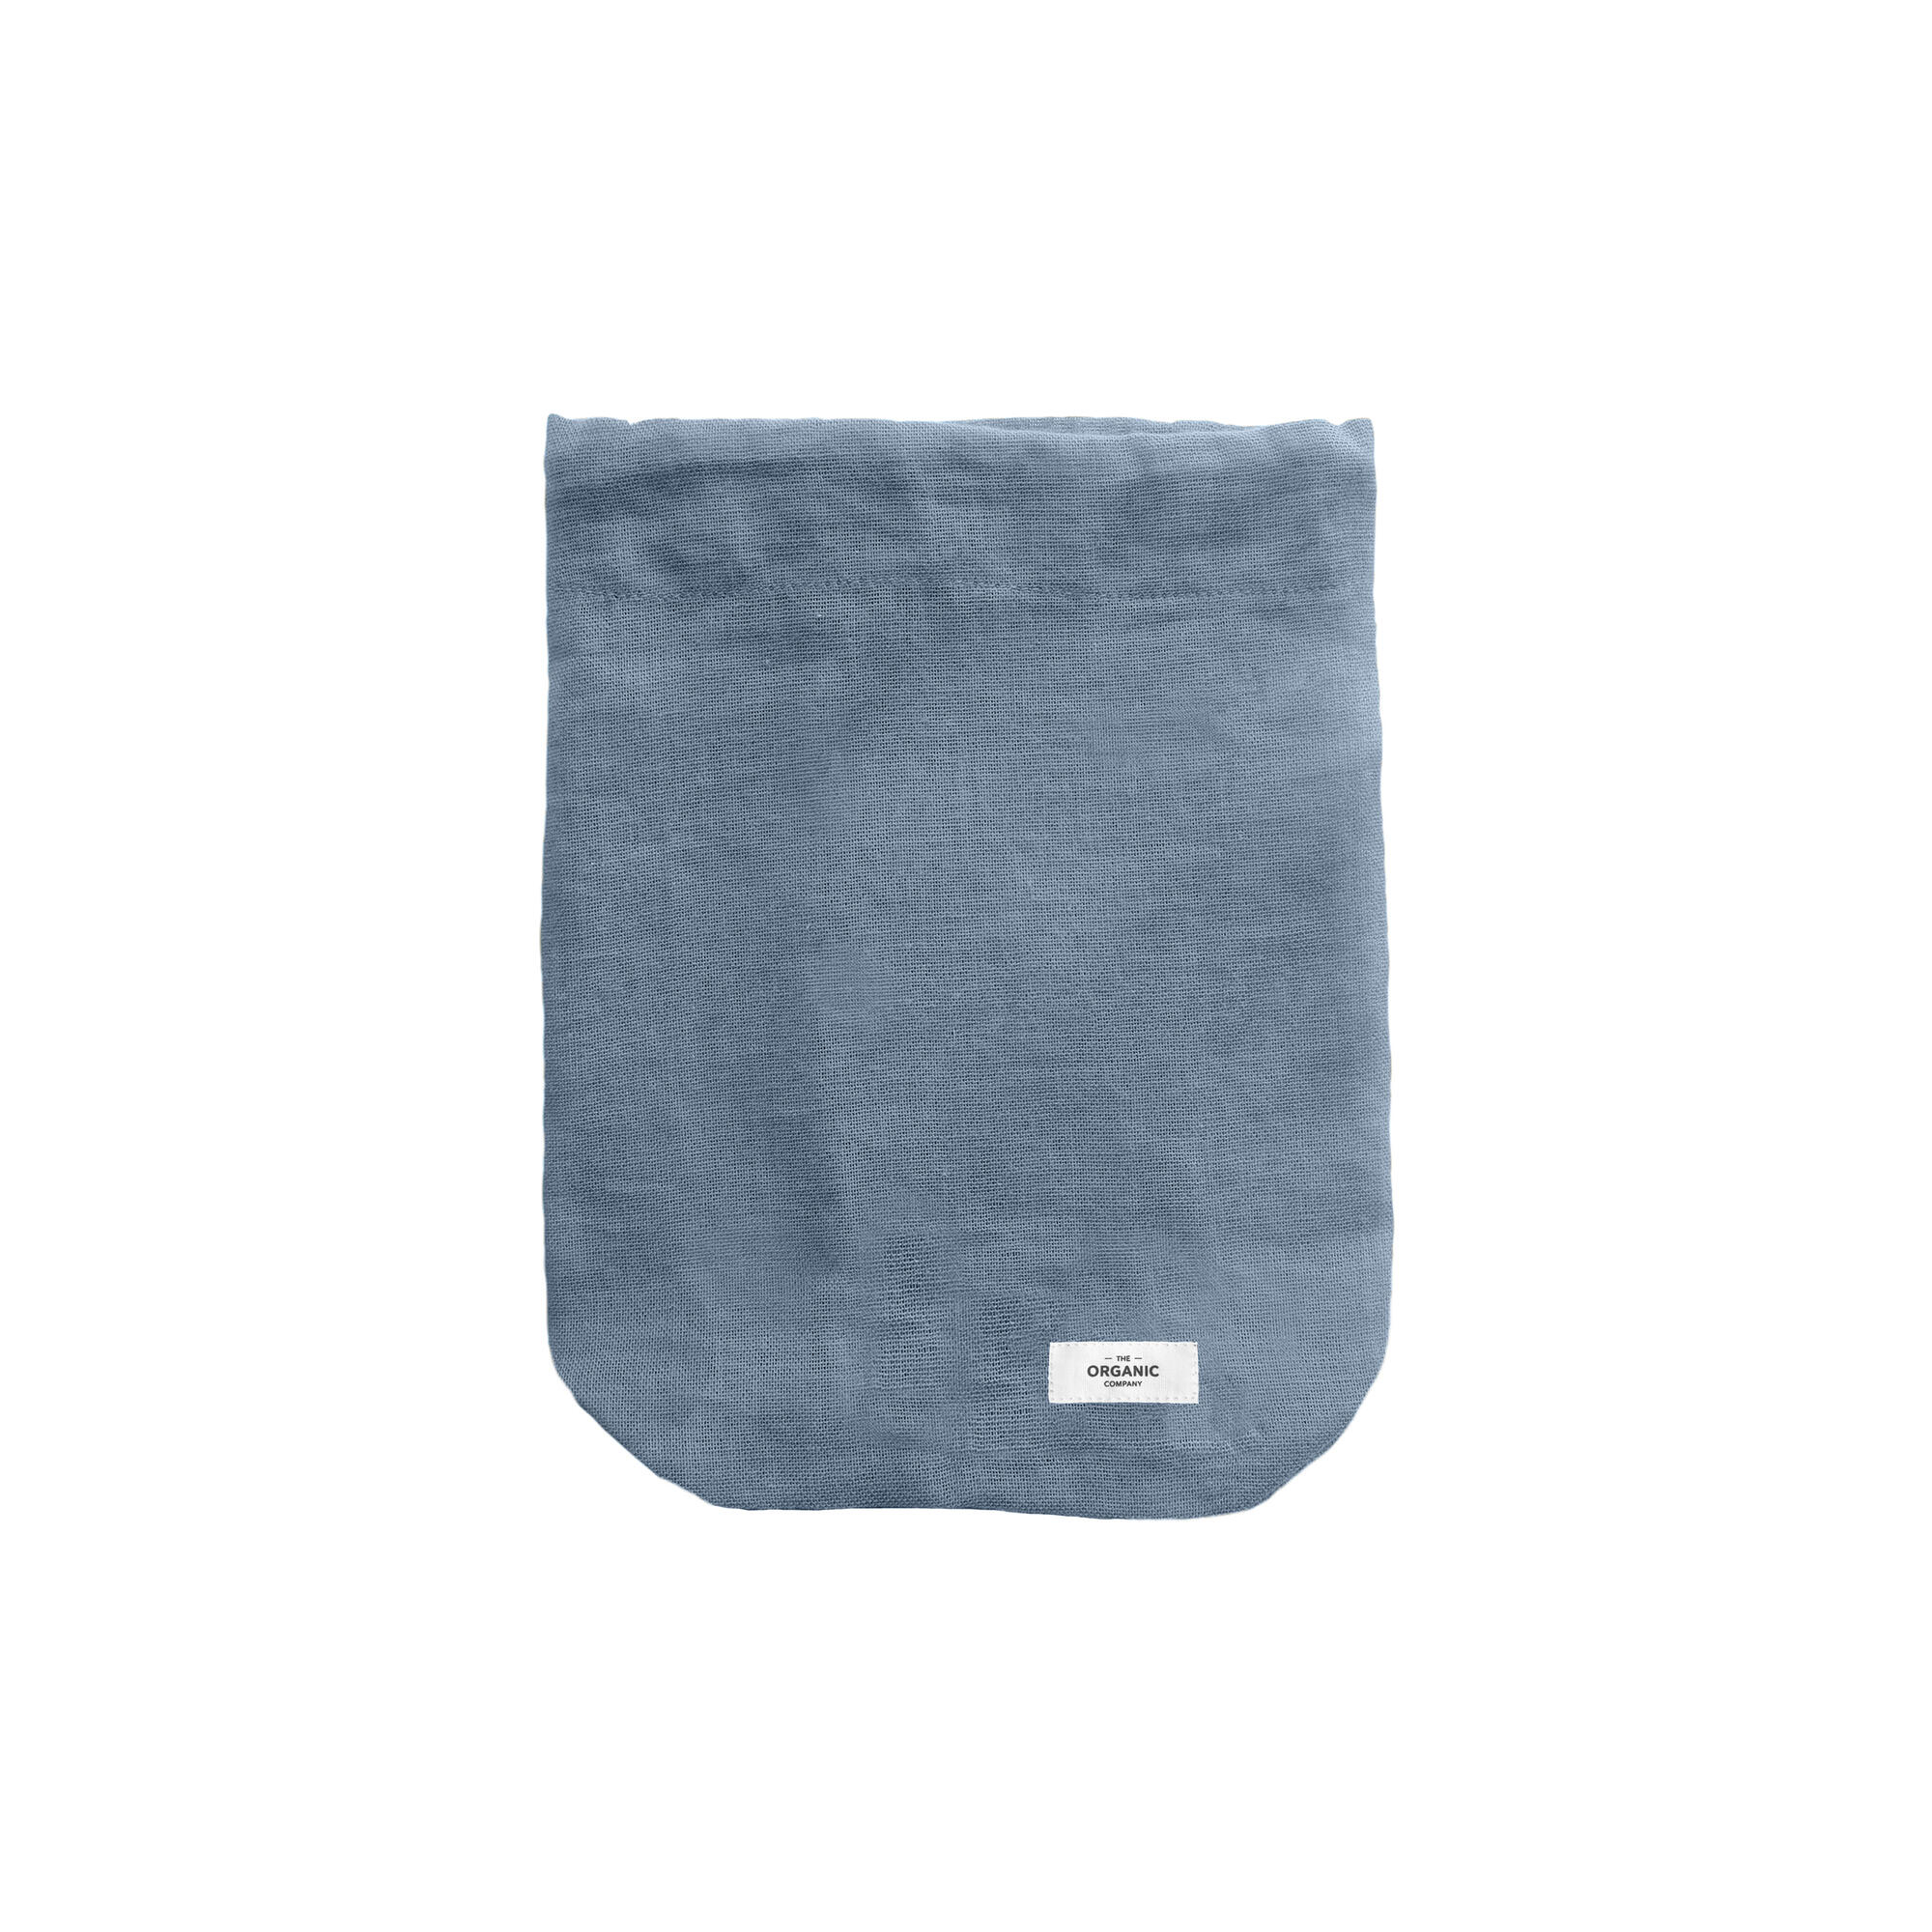 All Purpose Bag Medium, Grey blue*